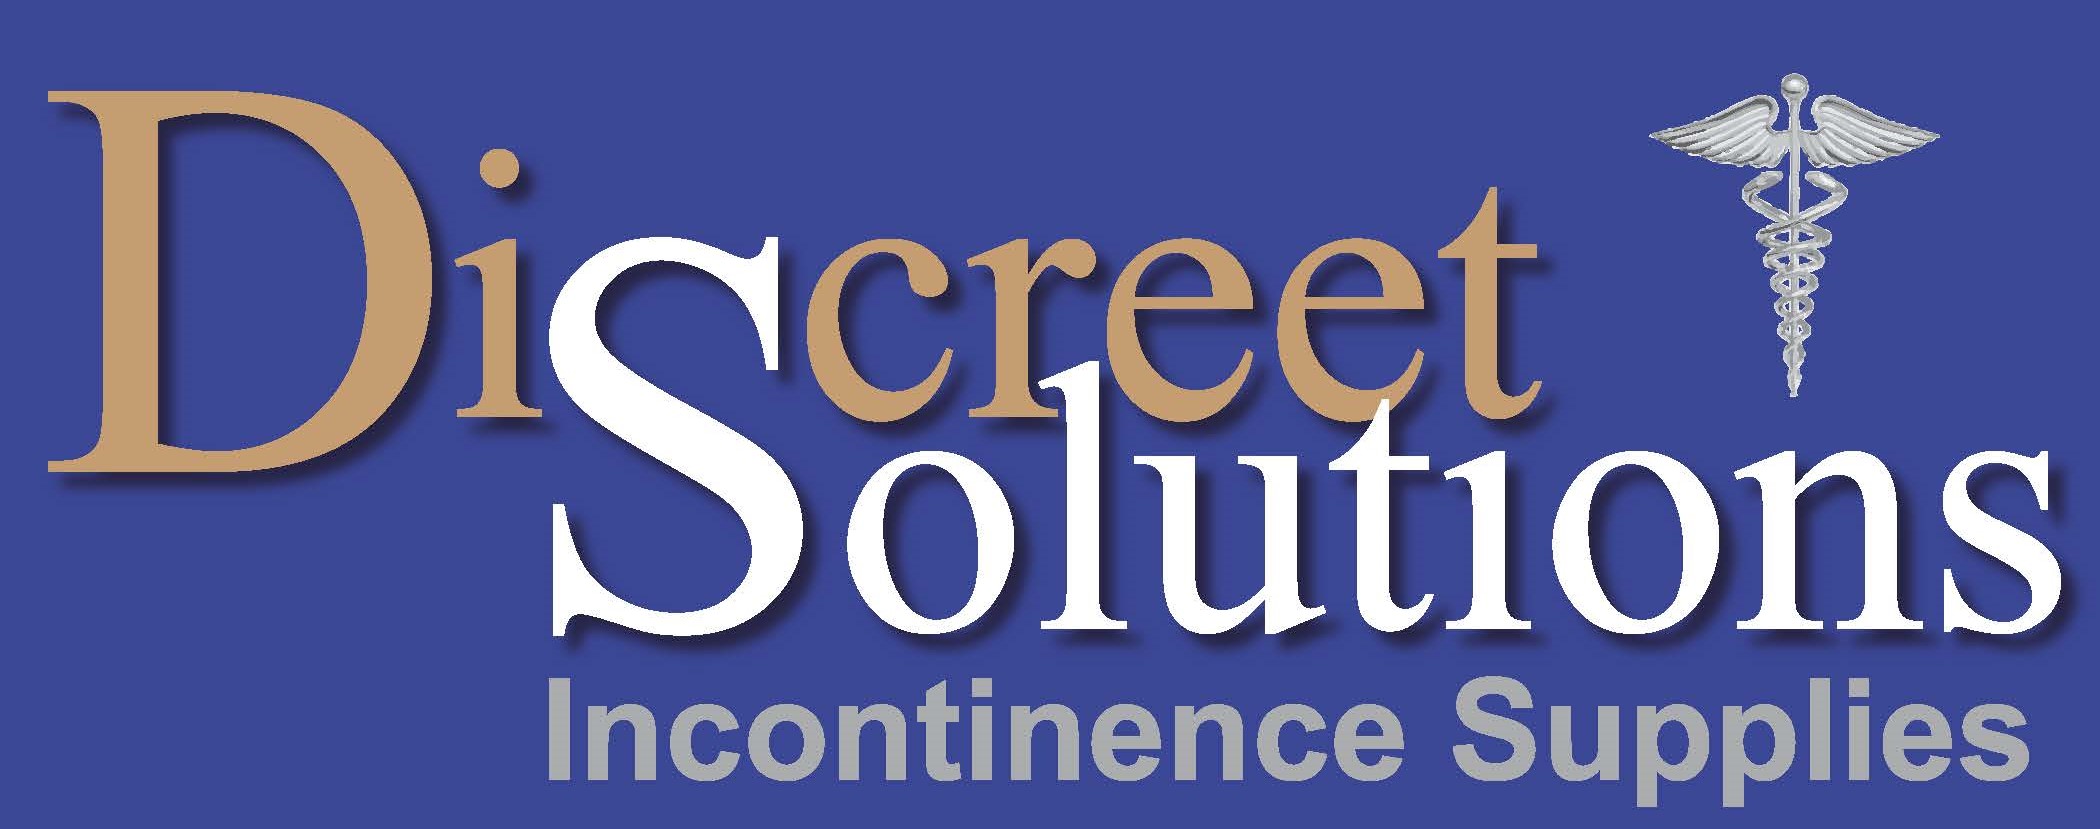 Discreet Solutions logo